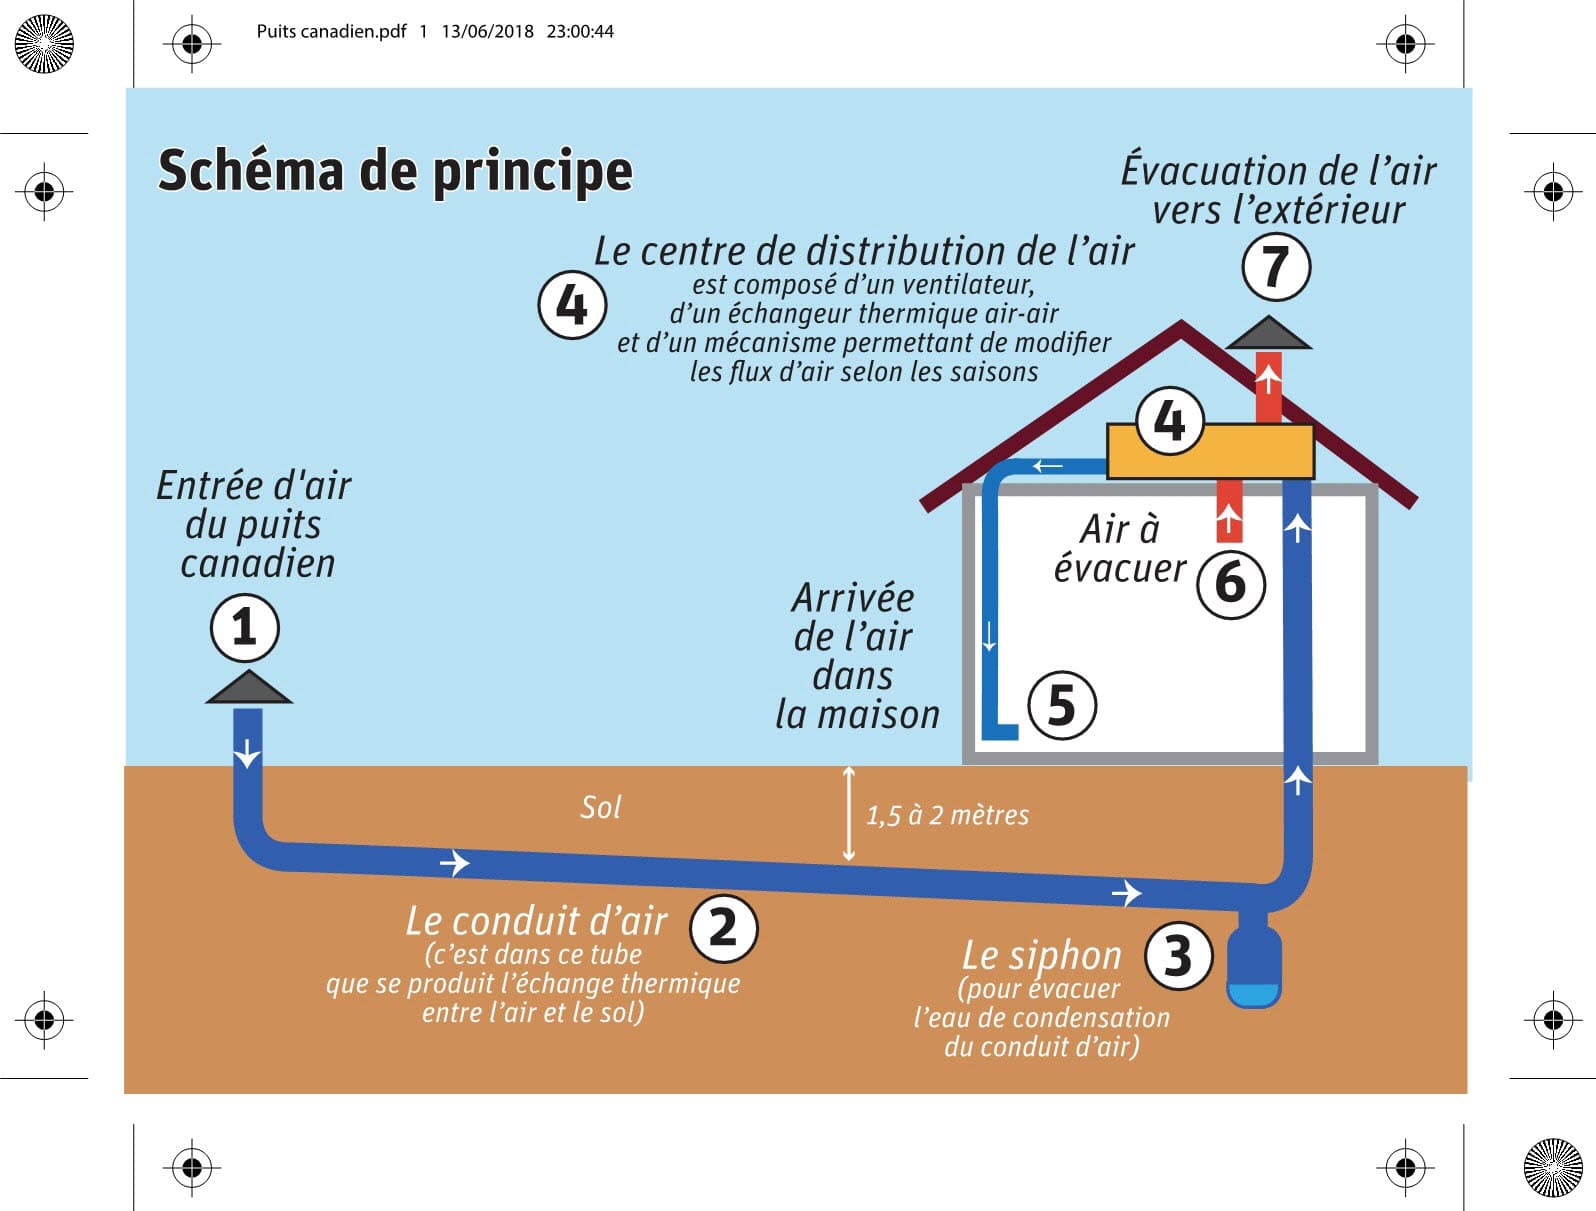 Schéma de principe d'un puits canadien